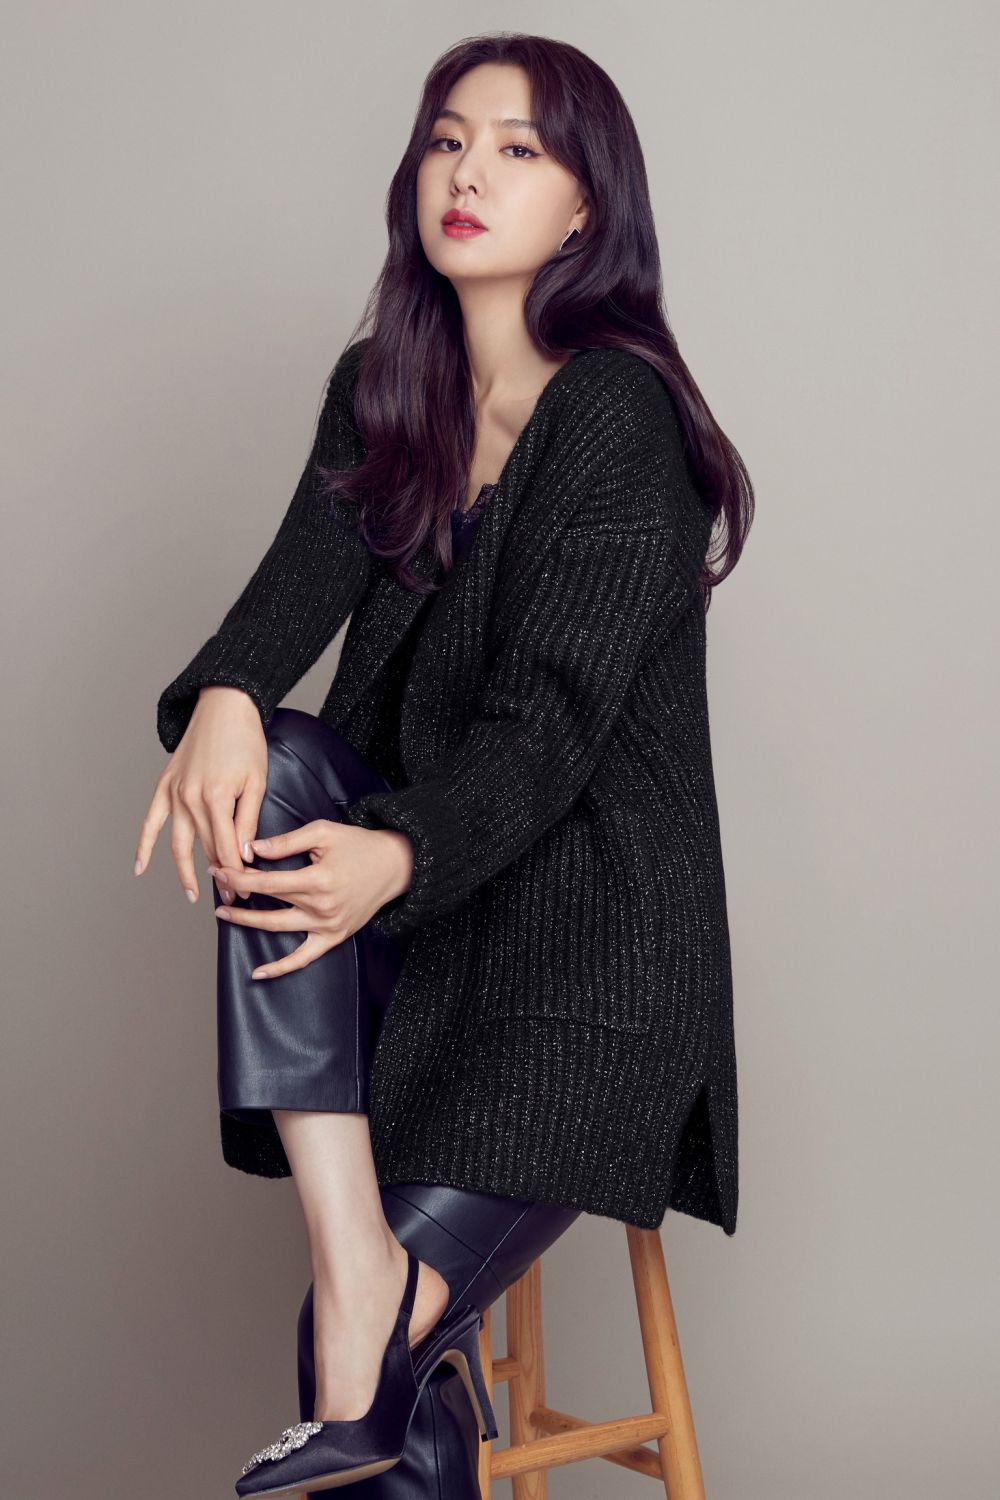 Seo Ji-hye Sexy and Hottest Photos , Latest Pics